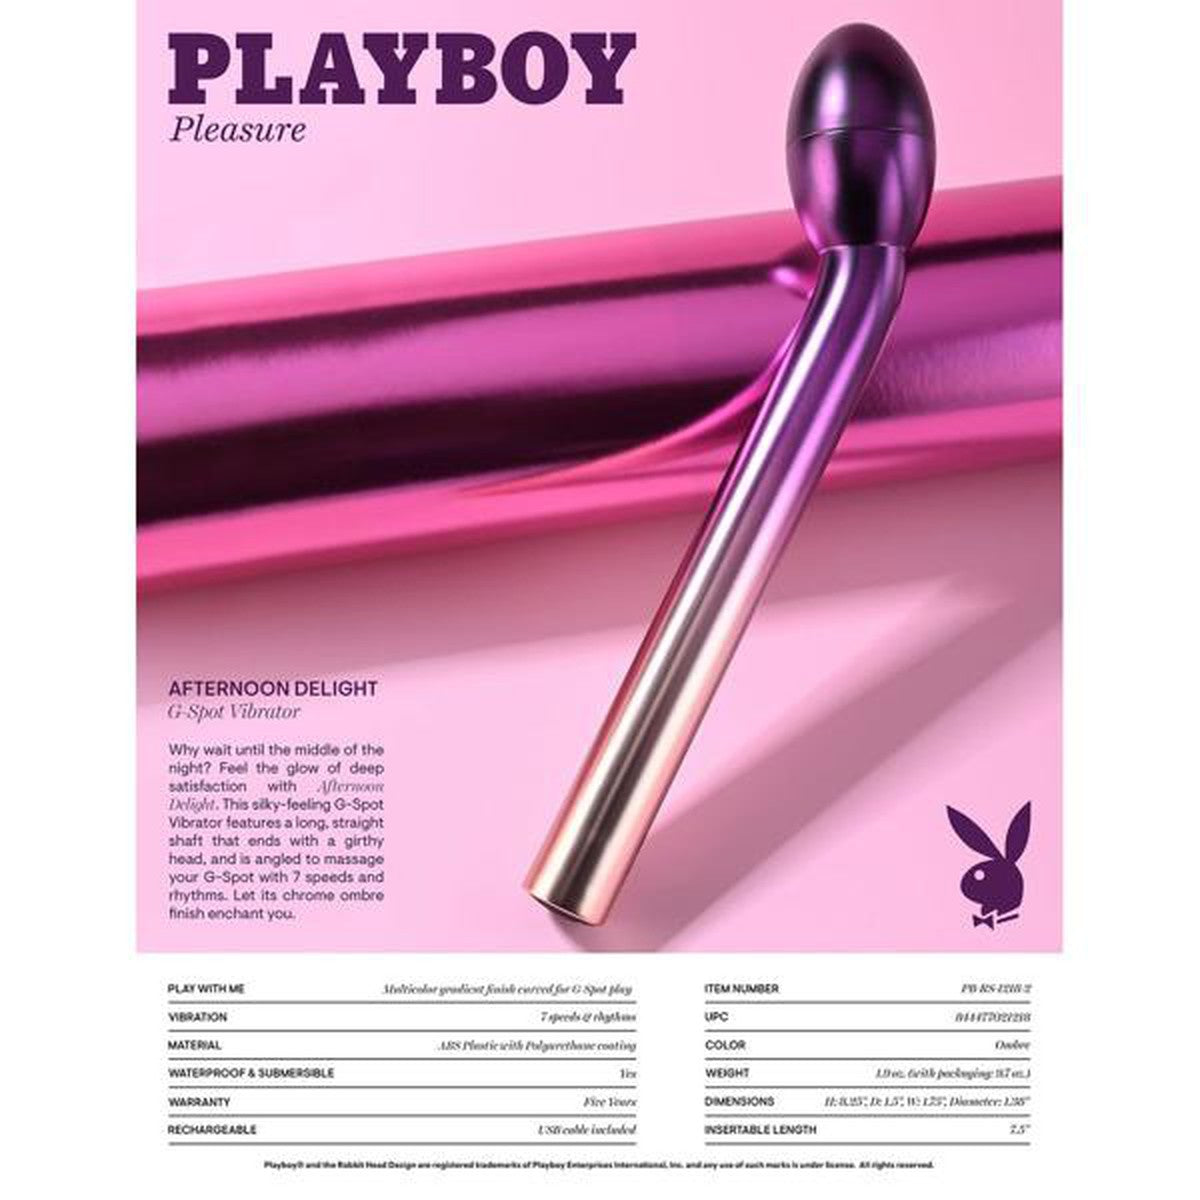 Playboy Afternoon Delight G-Spot Vibrator